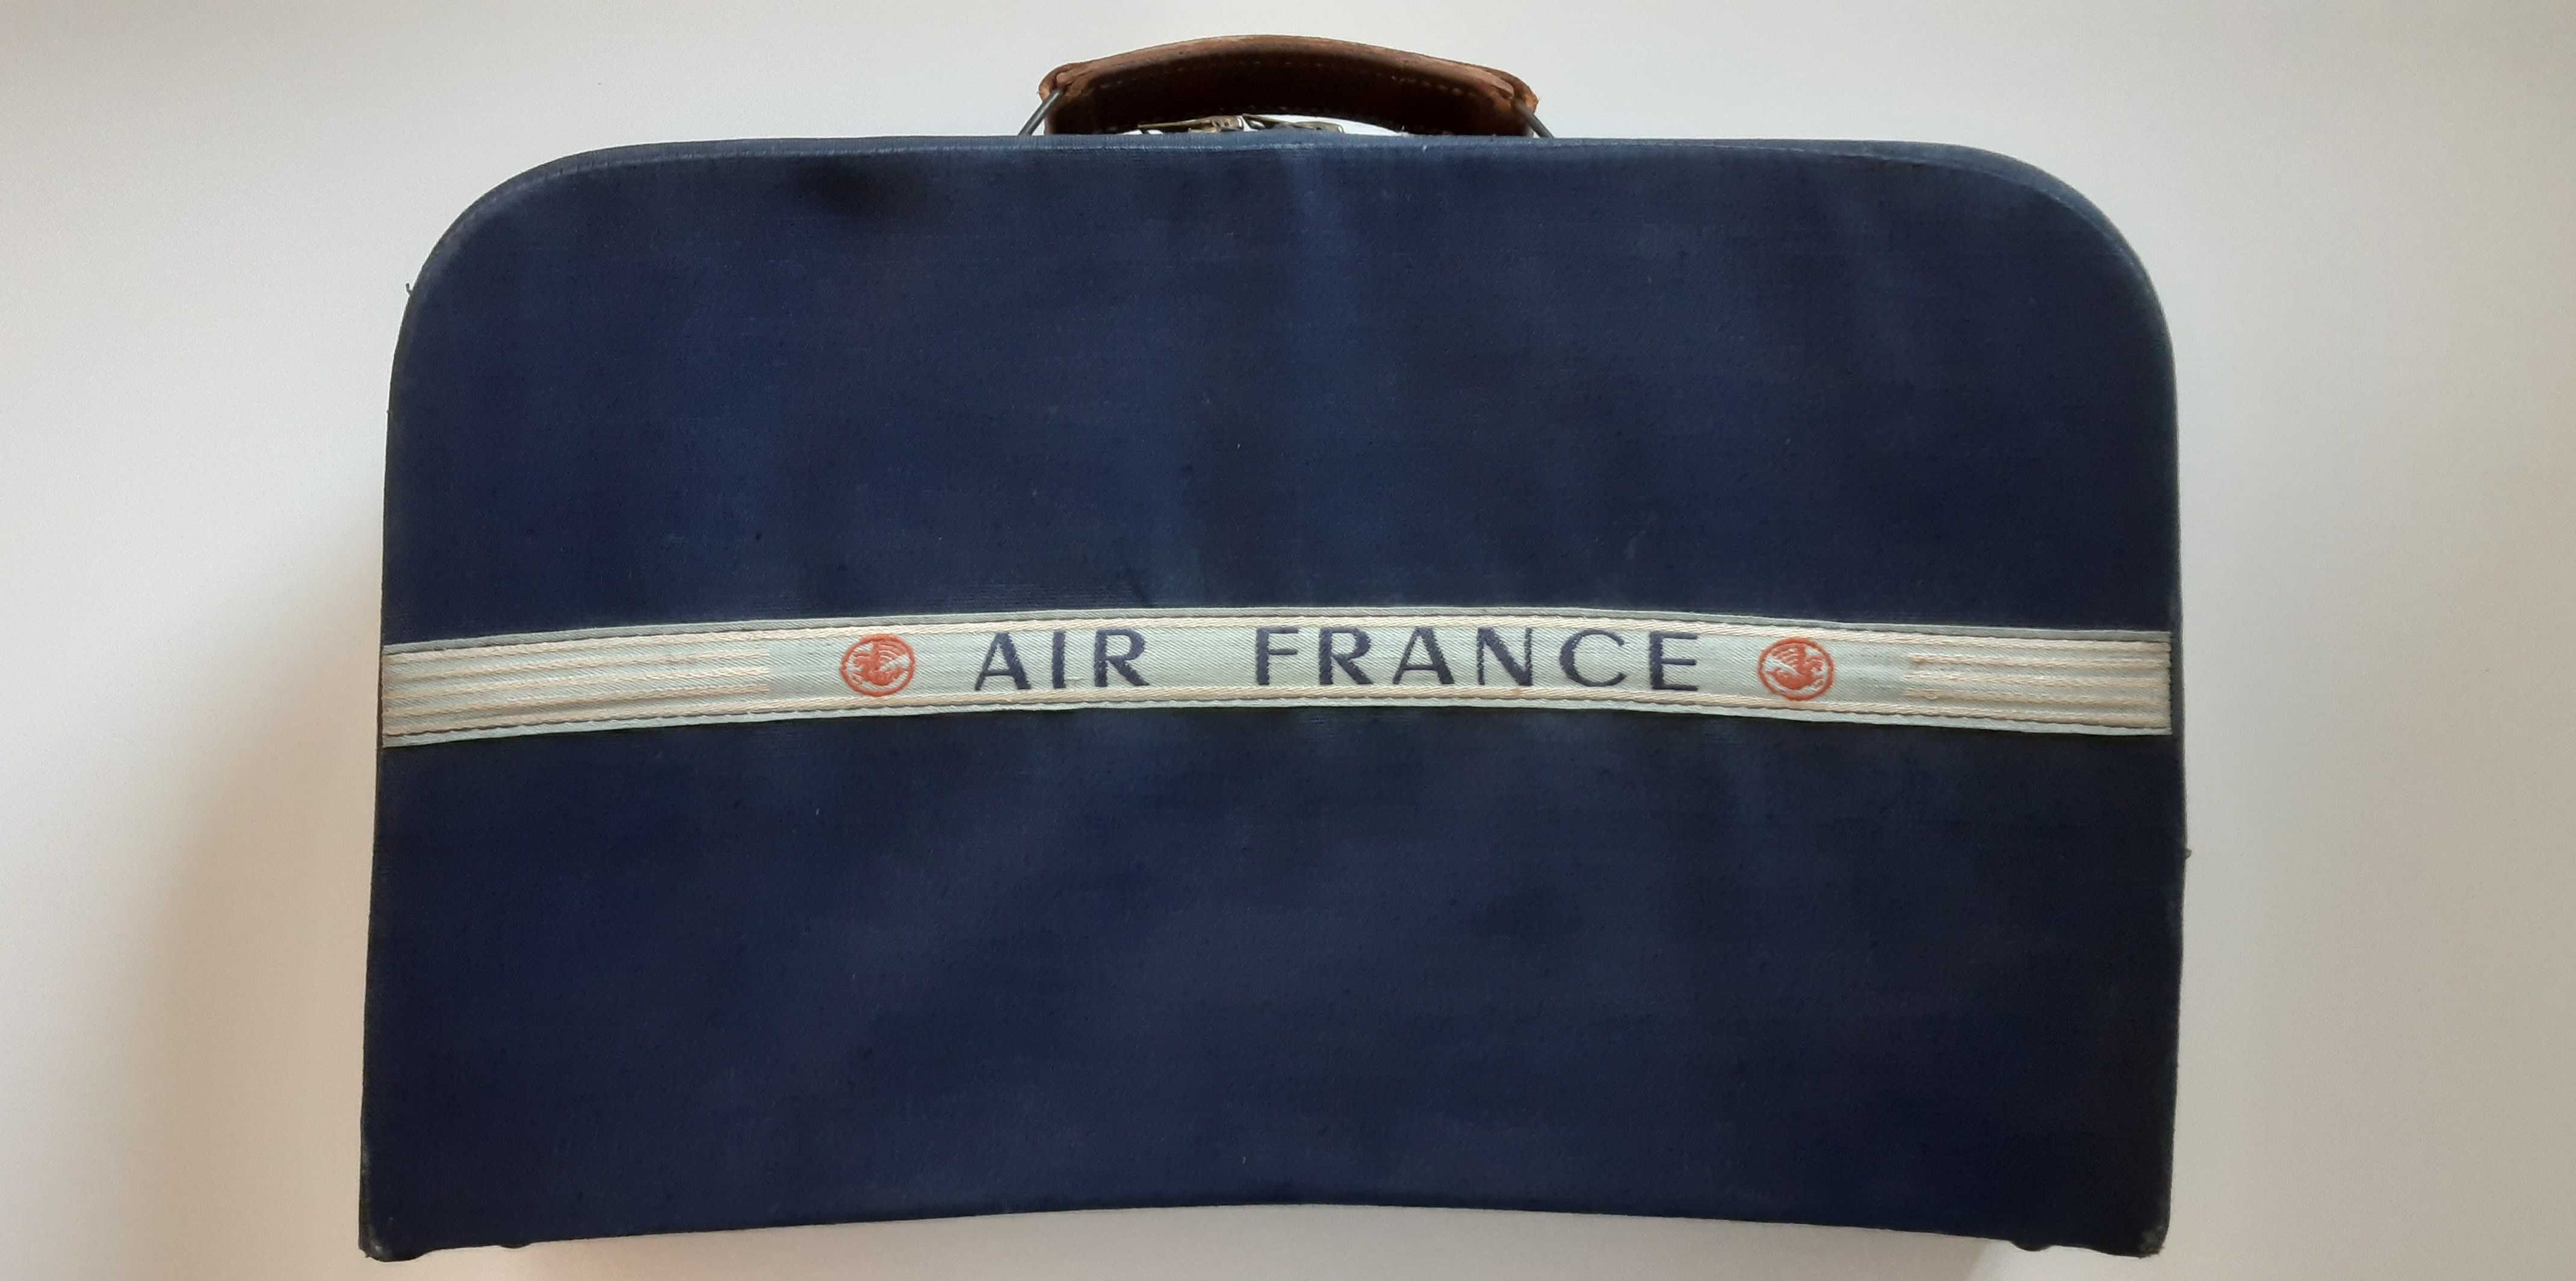 Pasta/Mala de voo Air France 60's